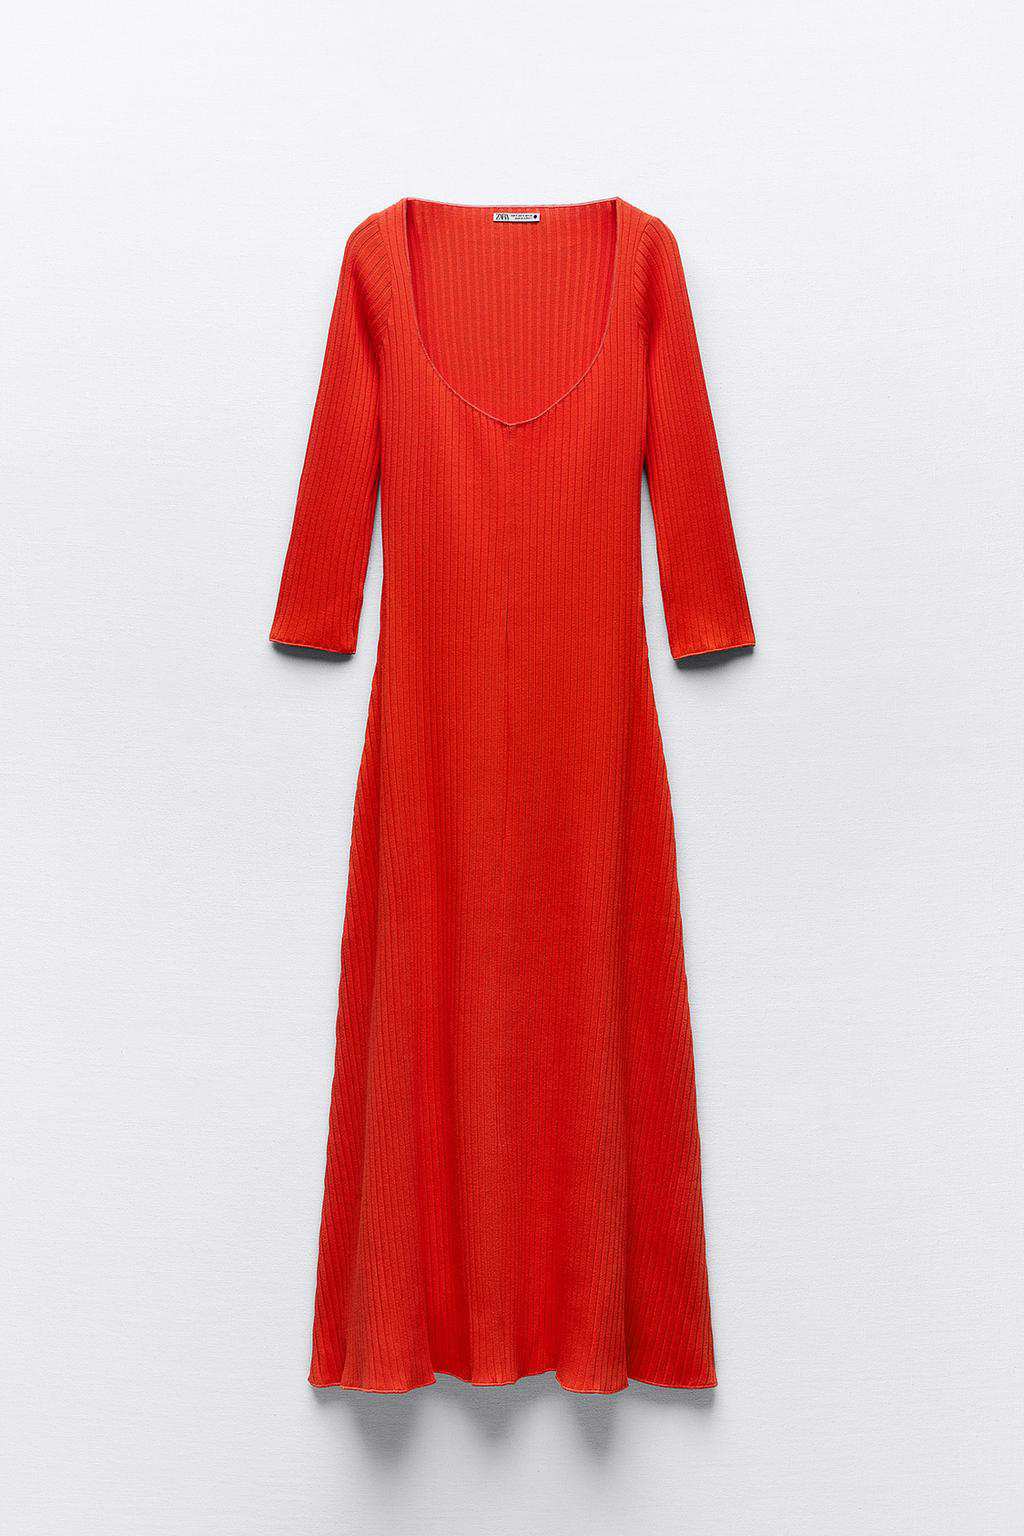 Vestido largo rib de Zara 25,95 euros